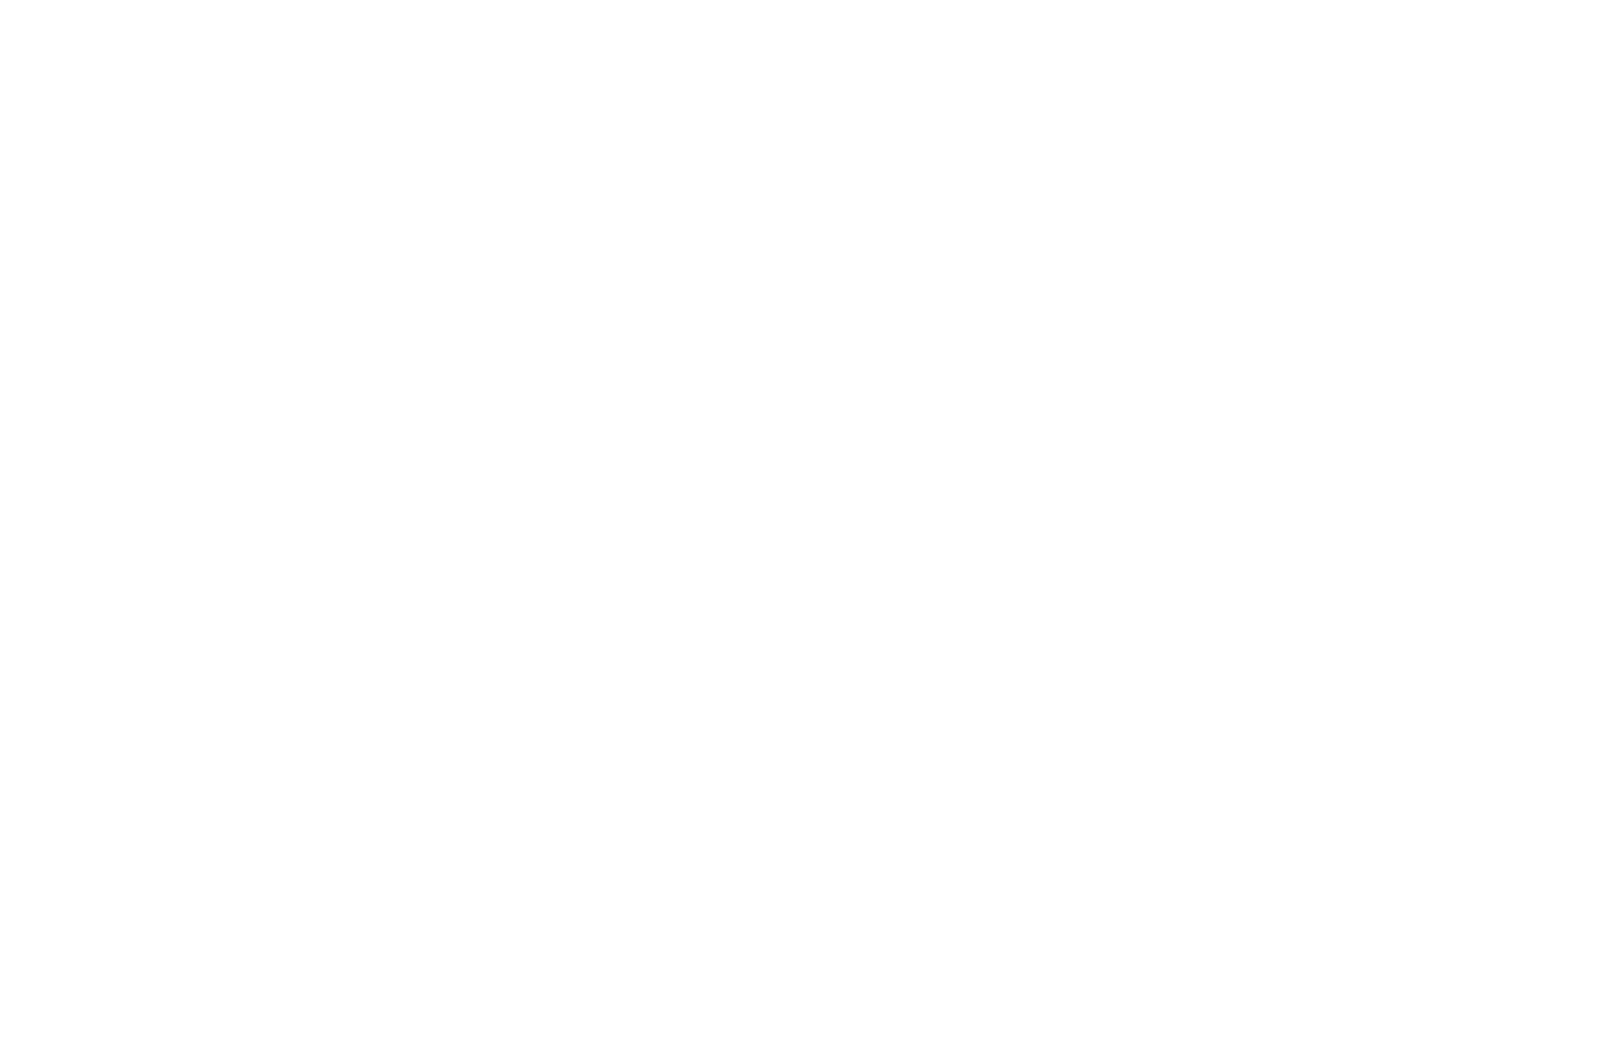 Next Phone